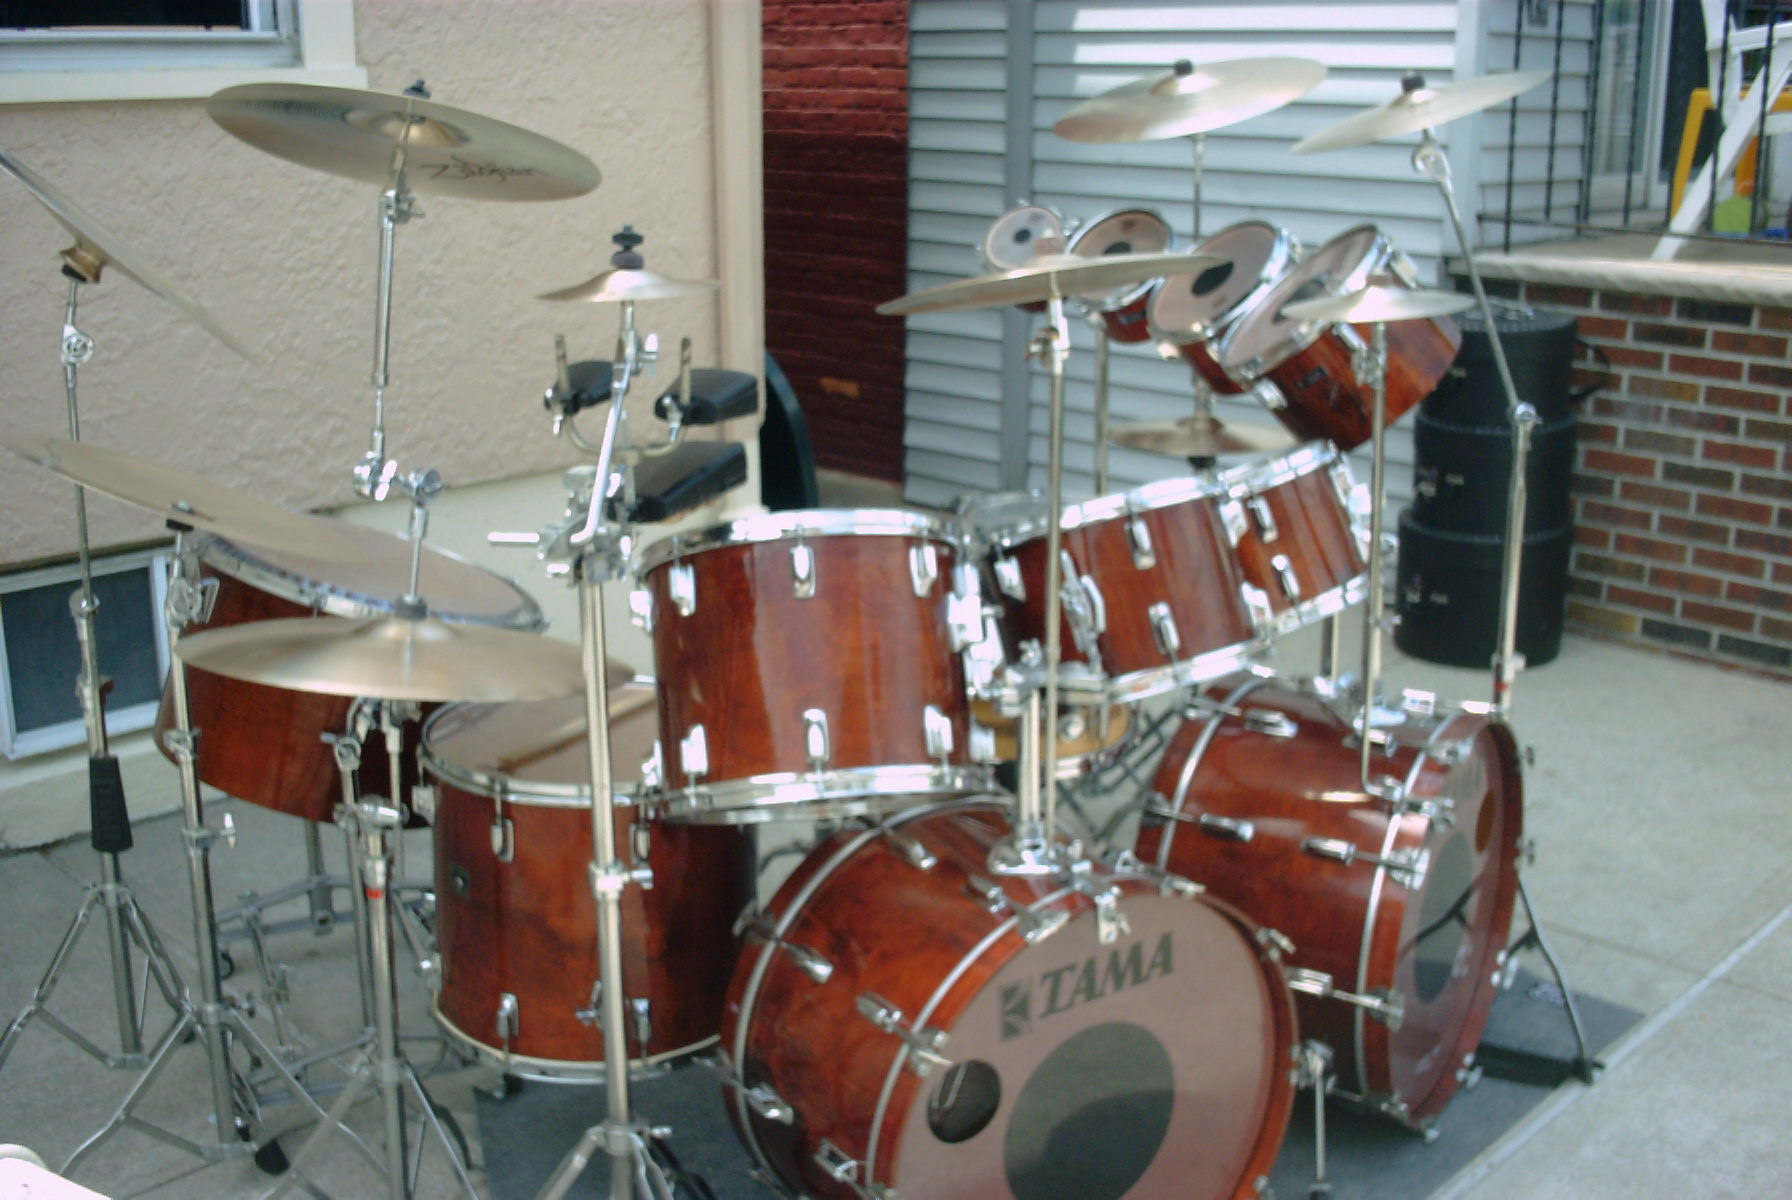 Neal Scanapico's drum kit